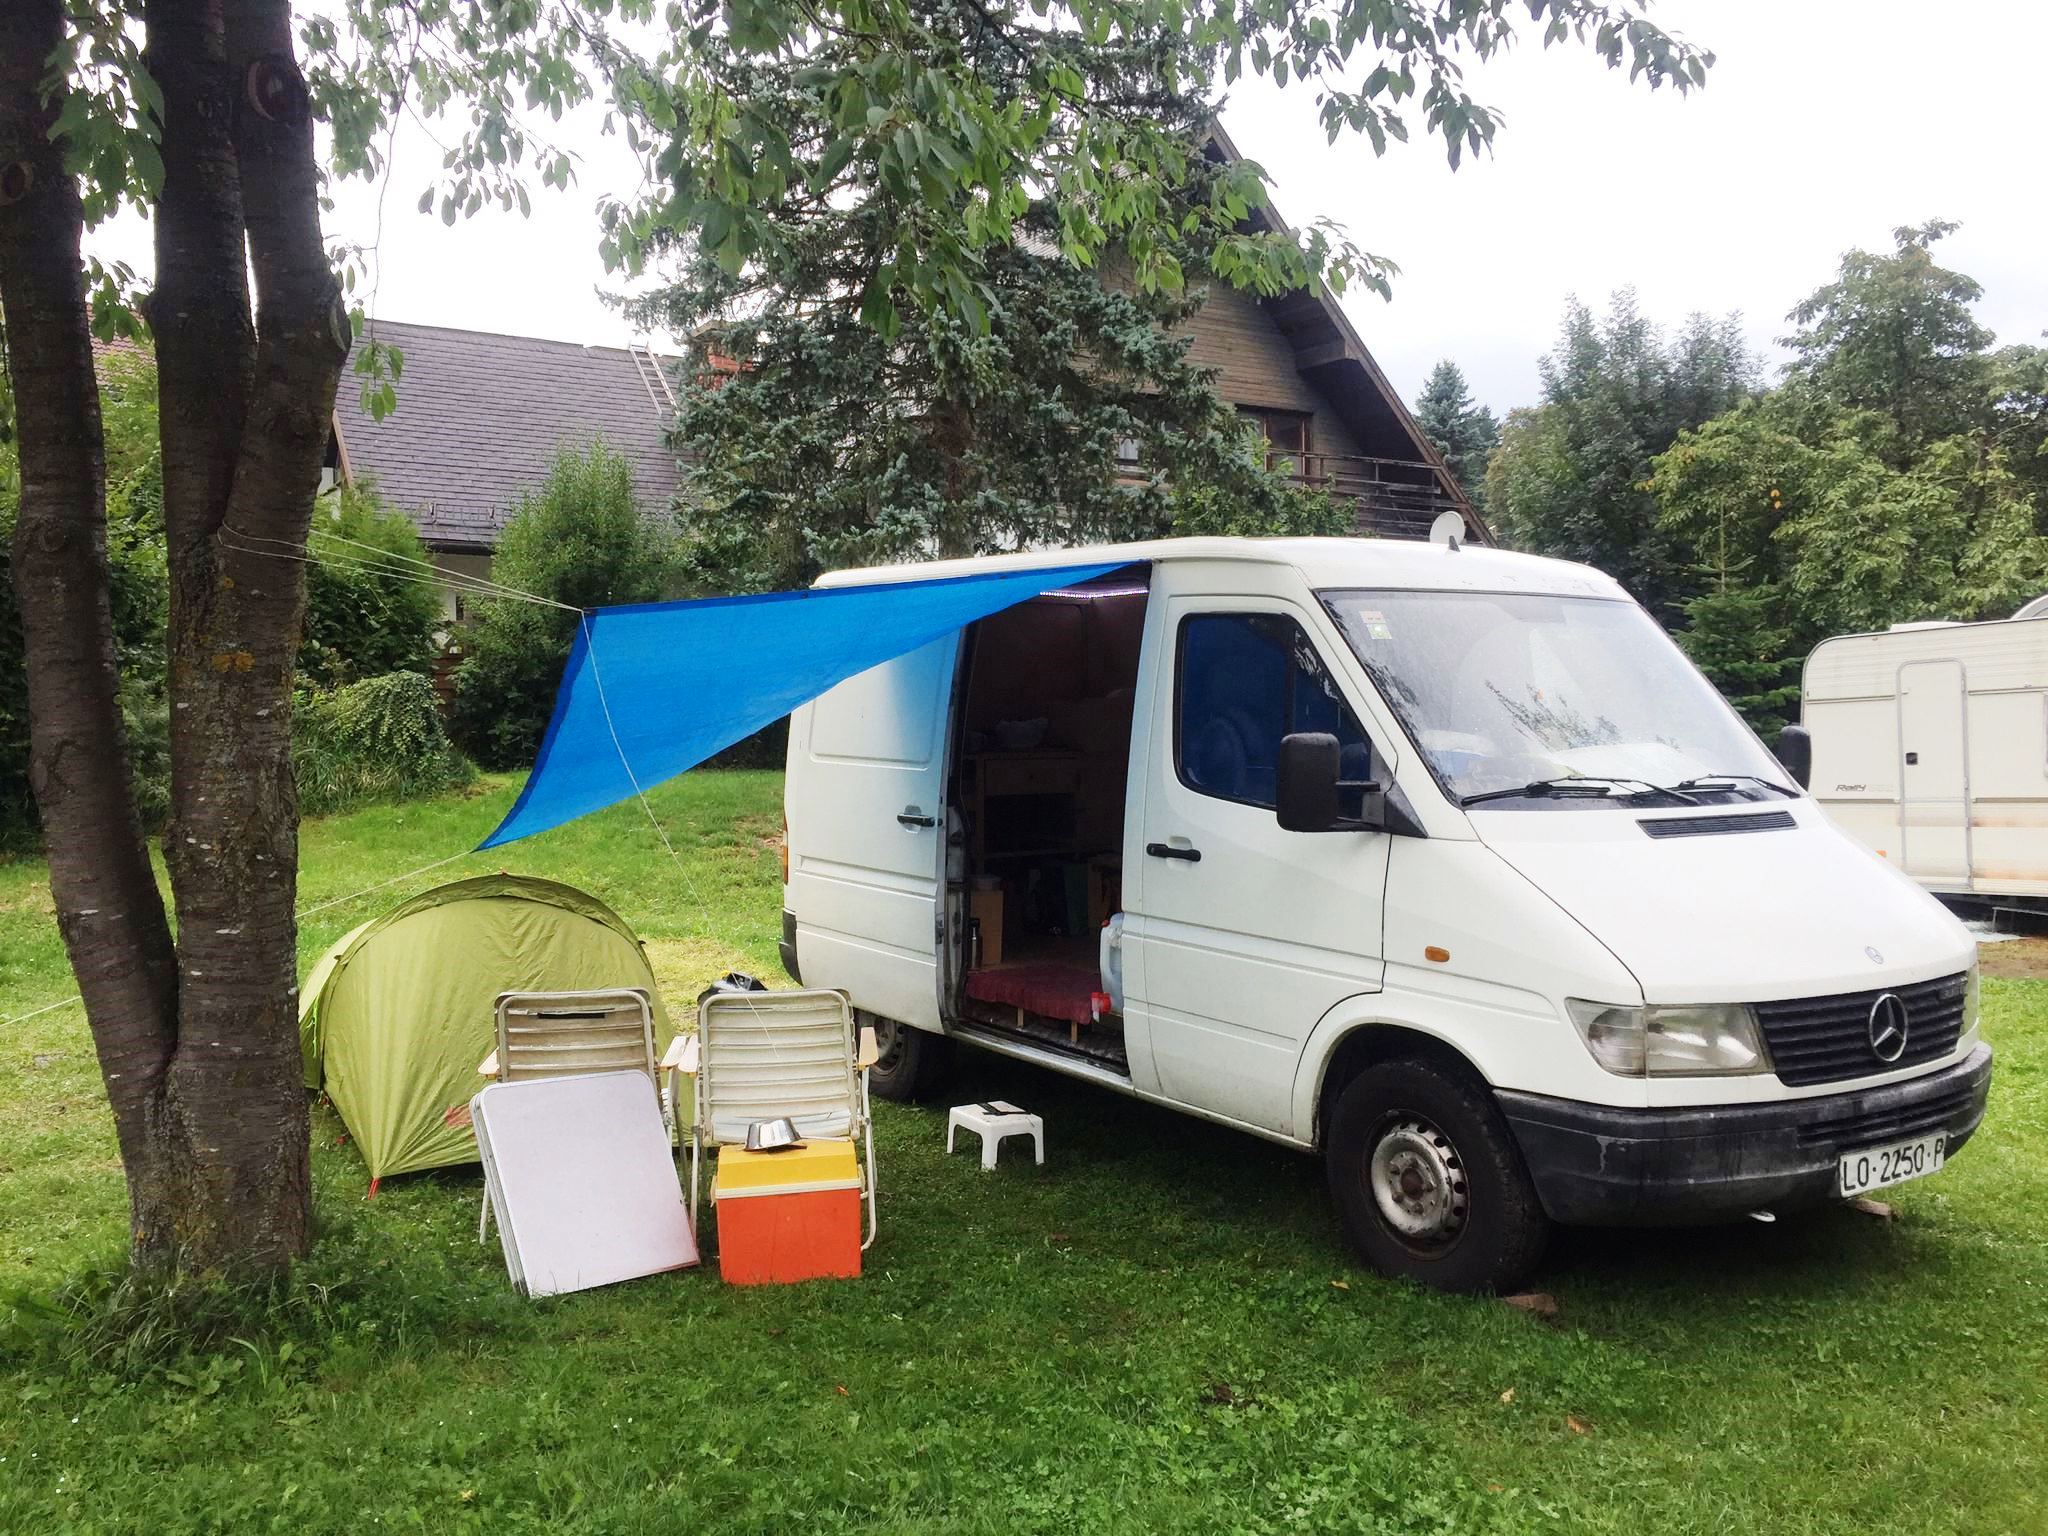 Camping in Vienna - enlarge